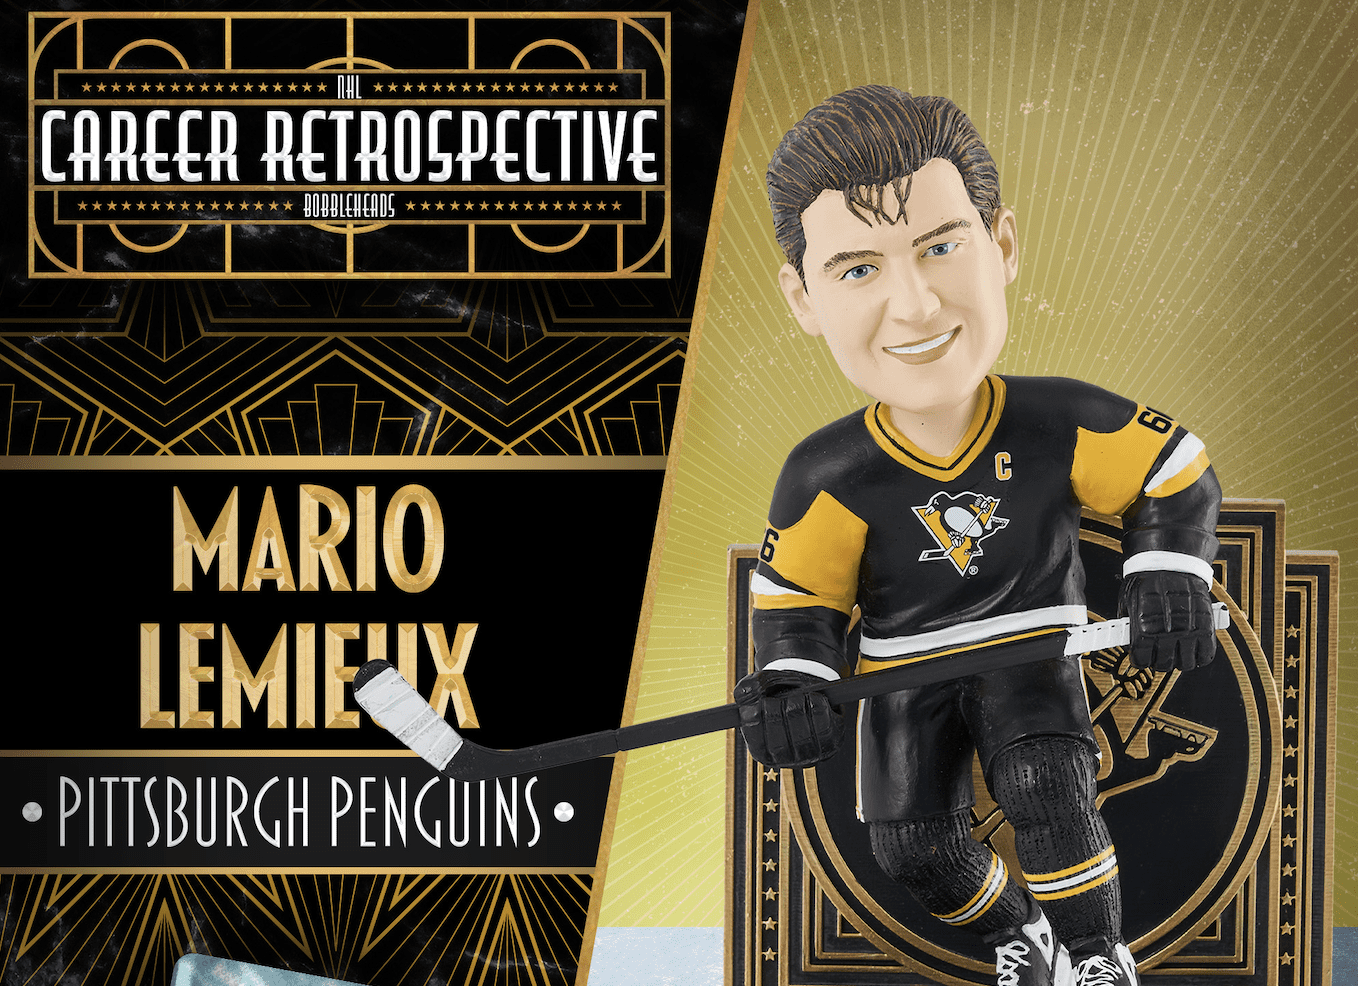 Pittsburgh Penguins, Mario Lemieux bobblehead